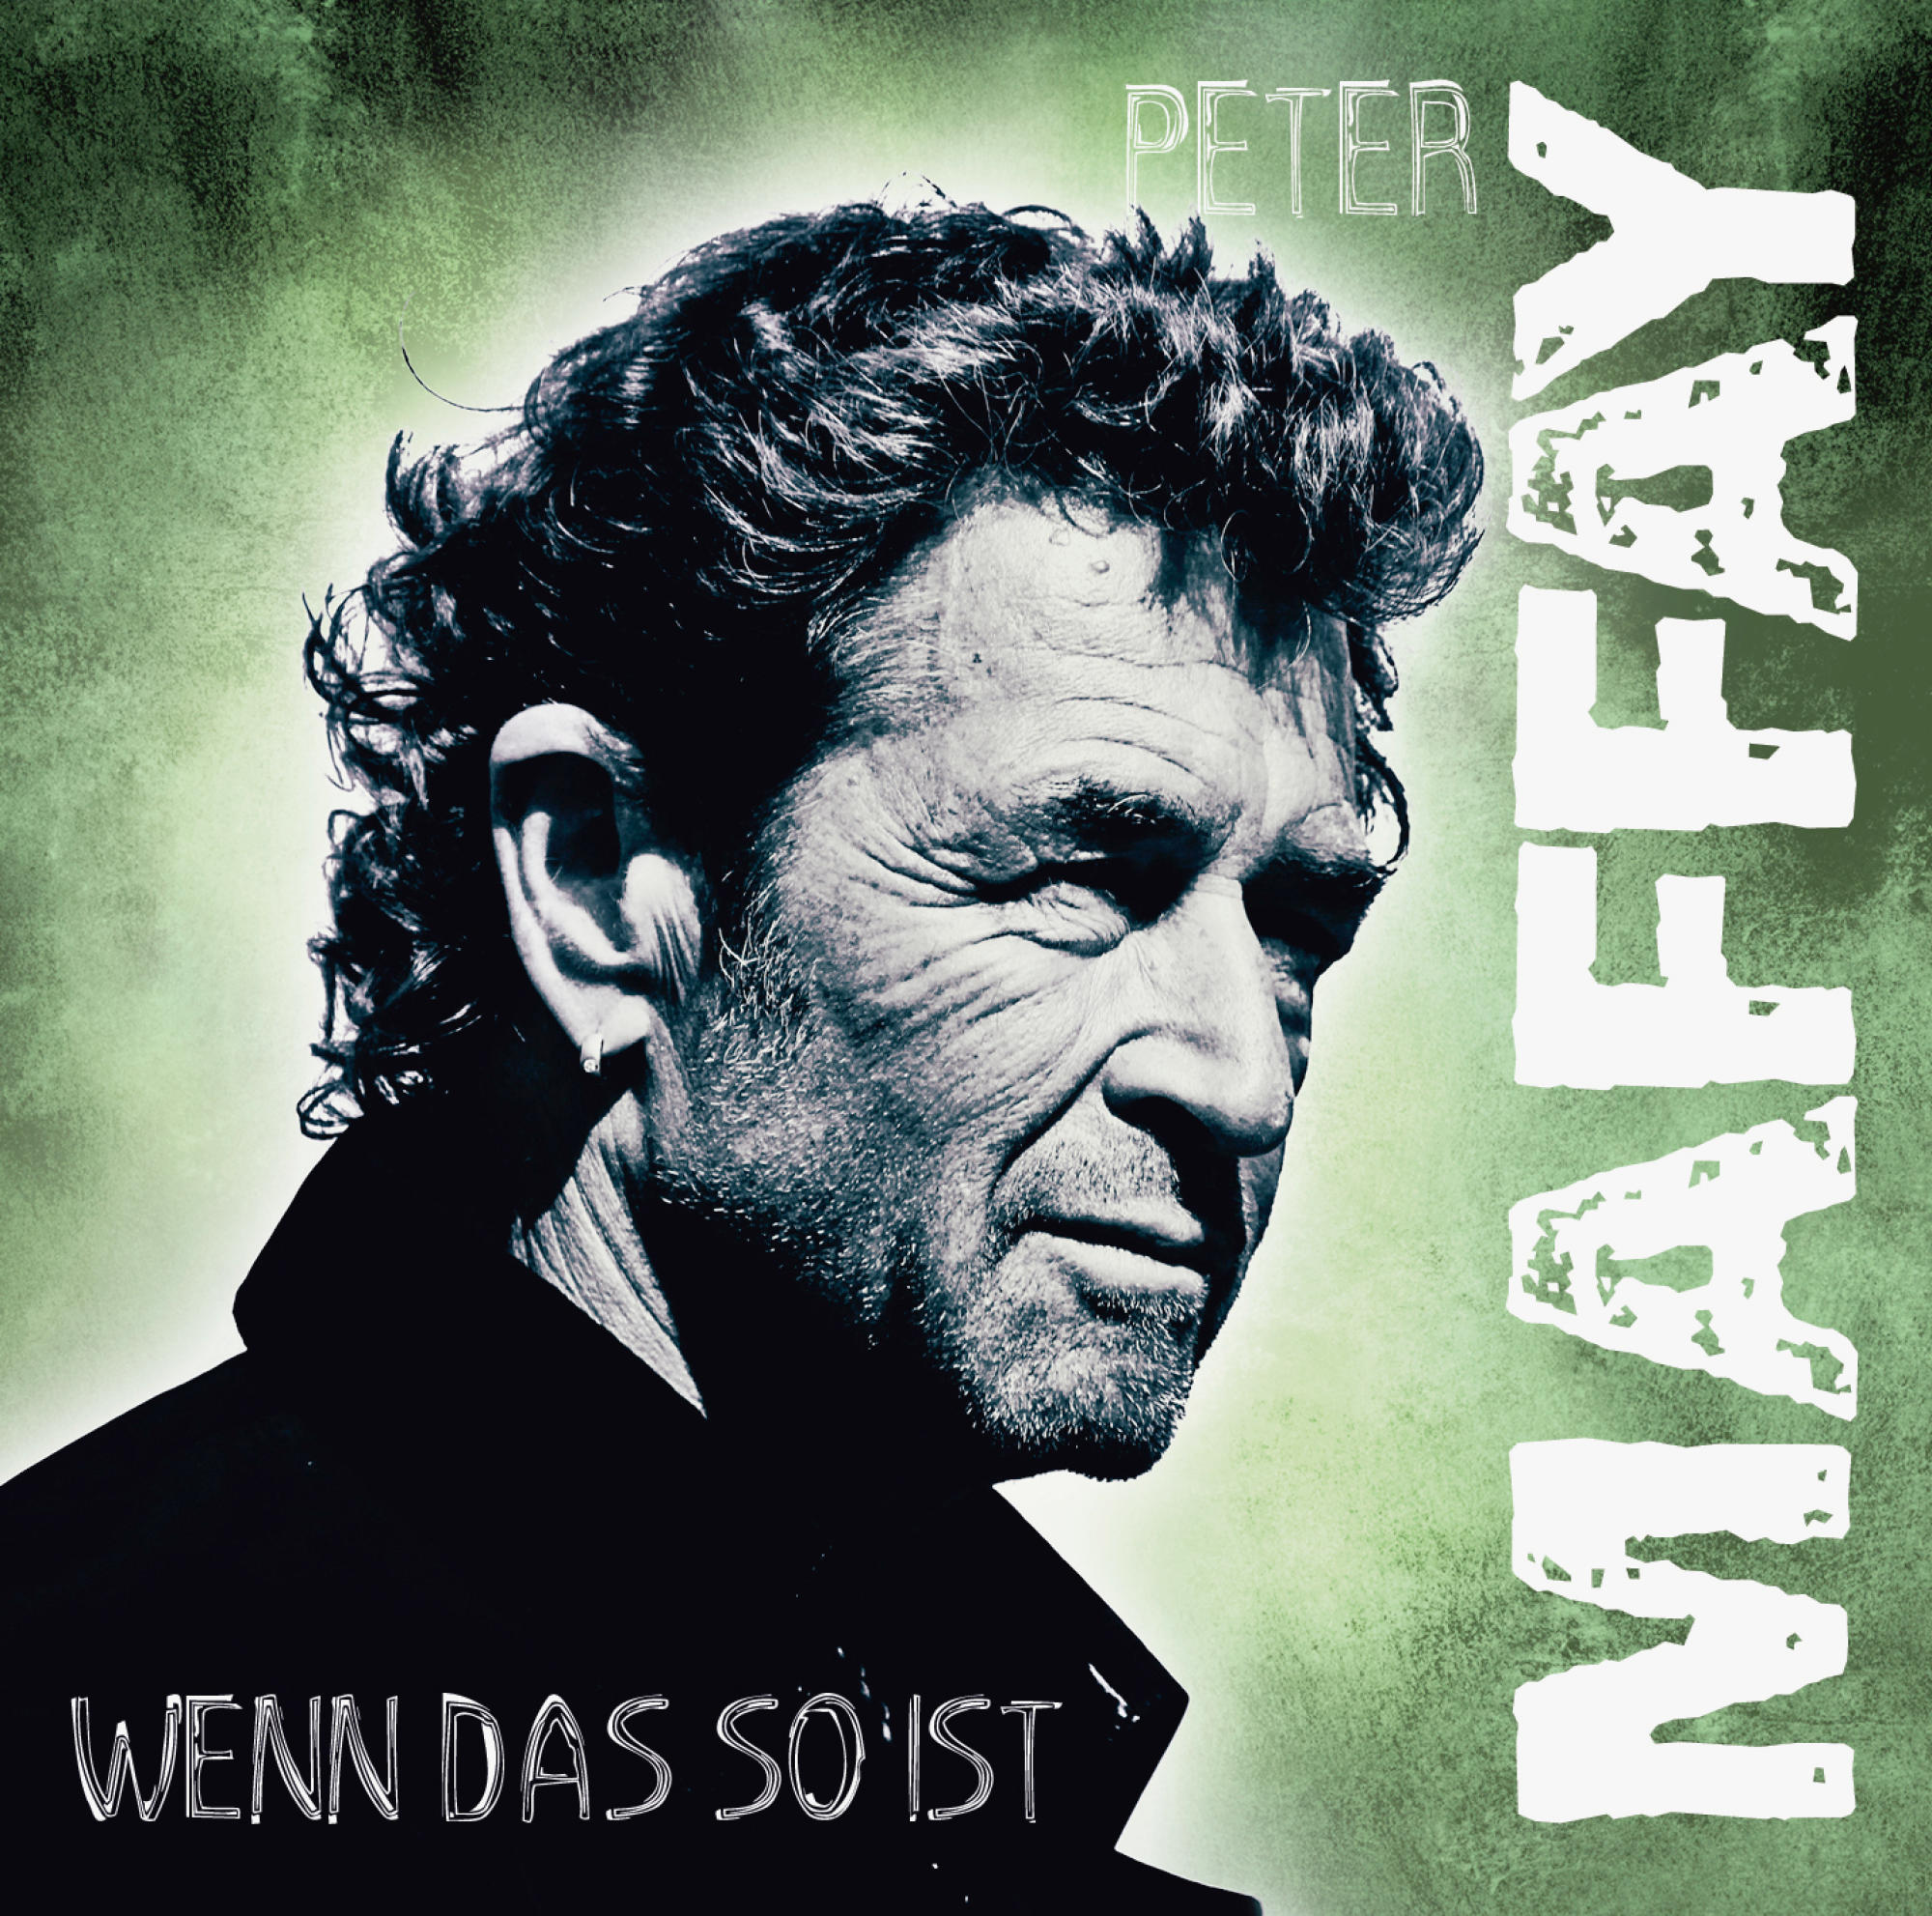 Peter Maffay - Wenn das (CD) ist so 